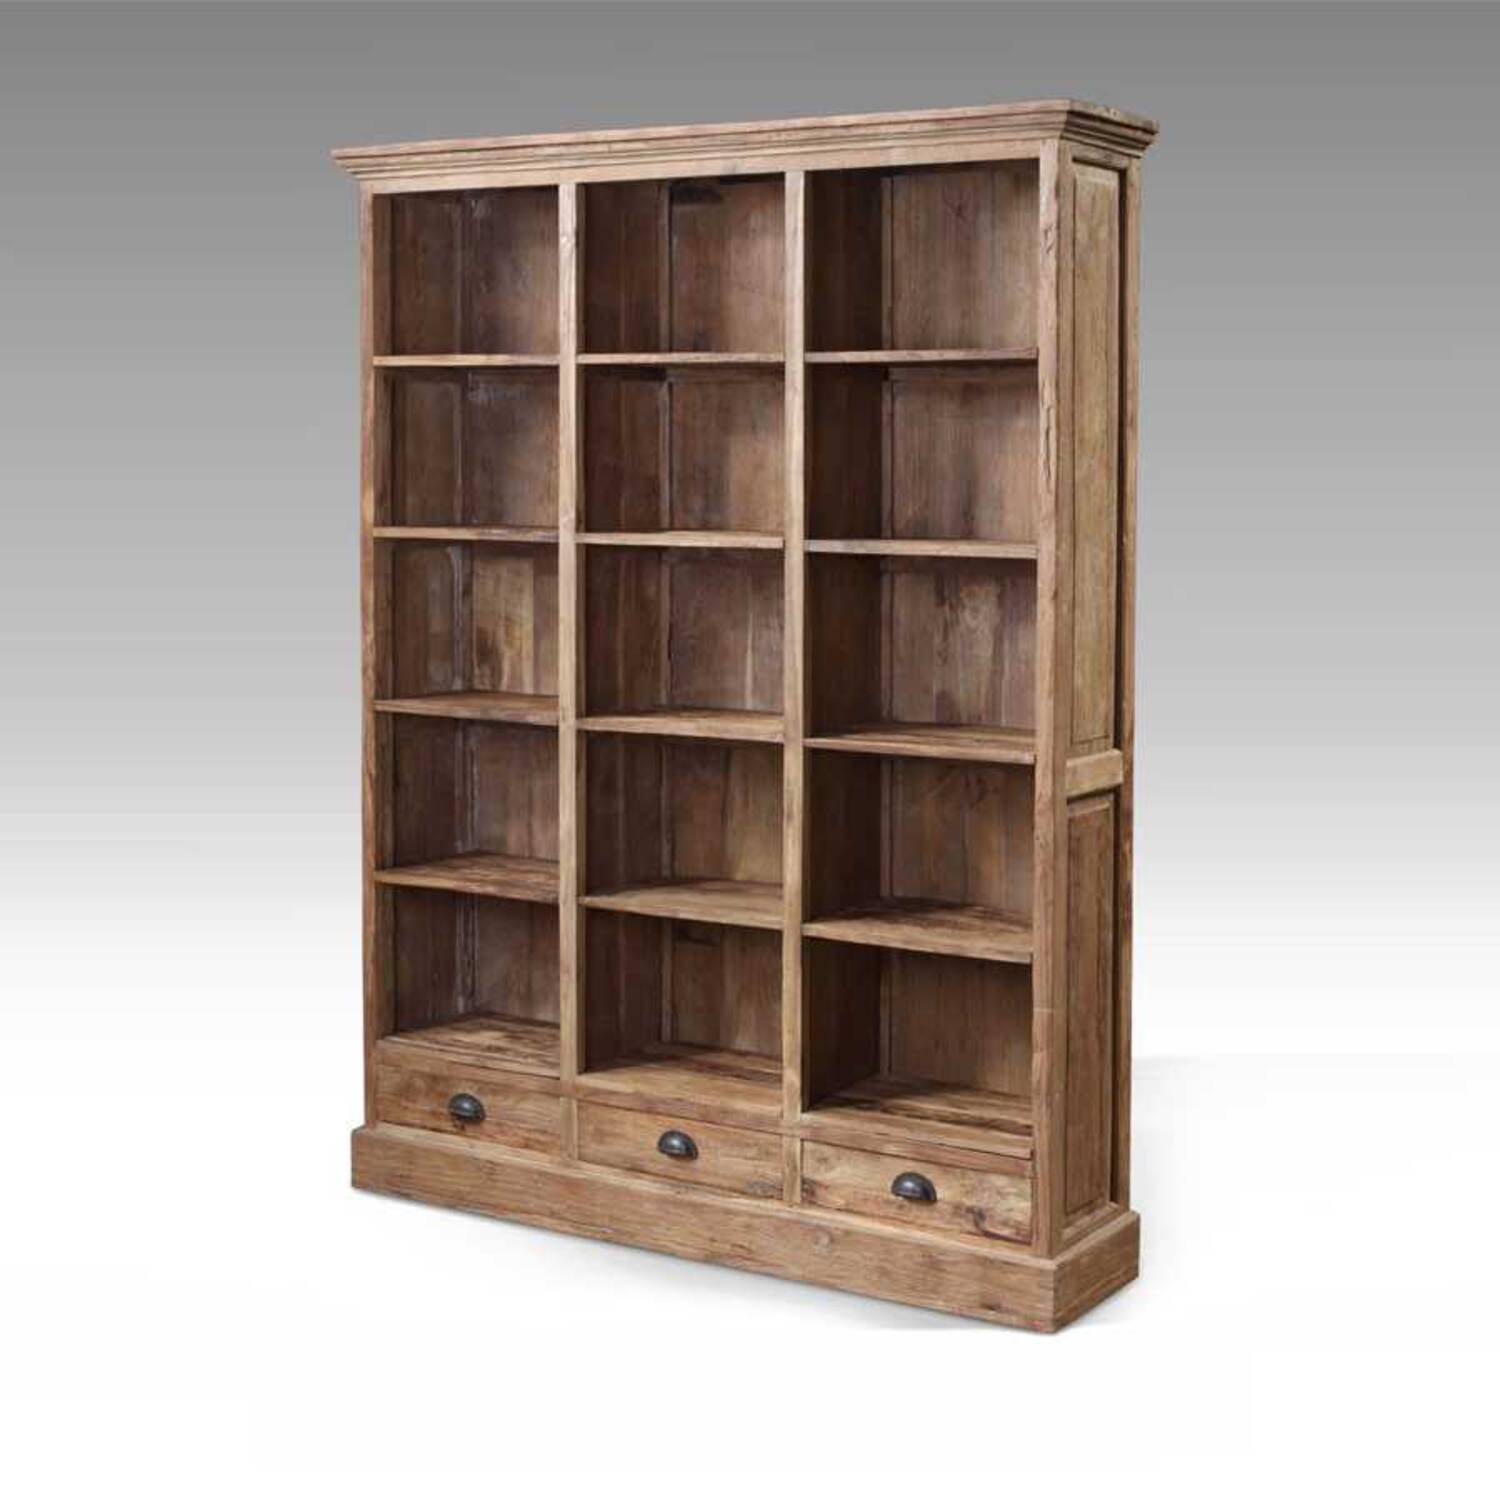 8 шкаф для книг. Шкаф "книжный №1". Шкаф Фабиано книжный шкаф. Деревянный книжный шкаф.